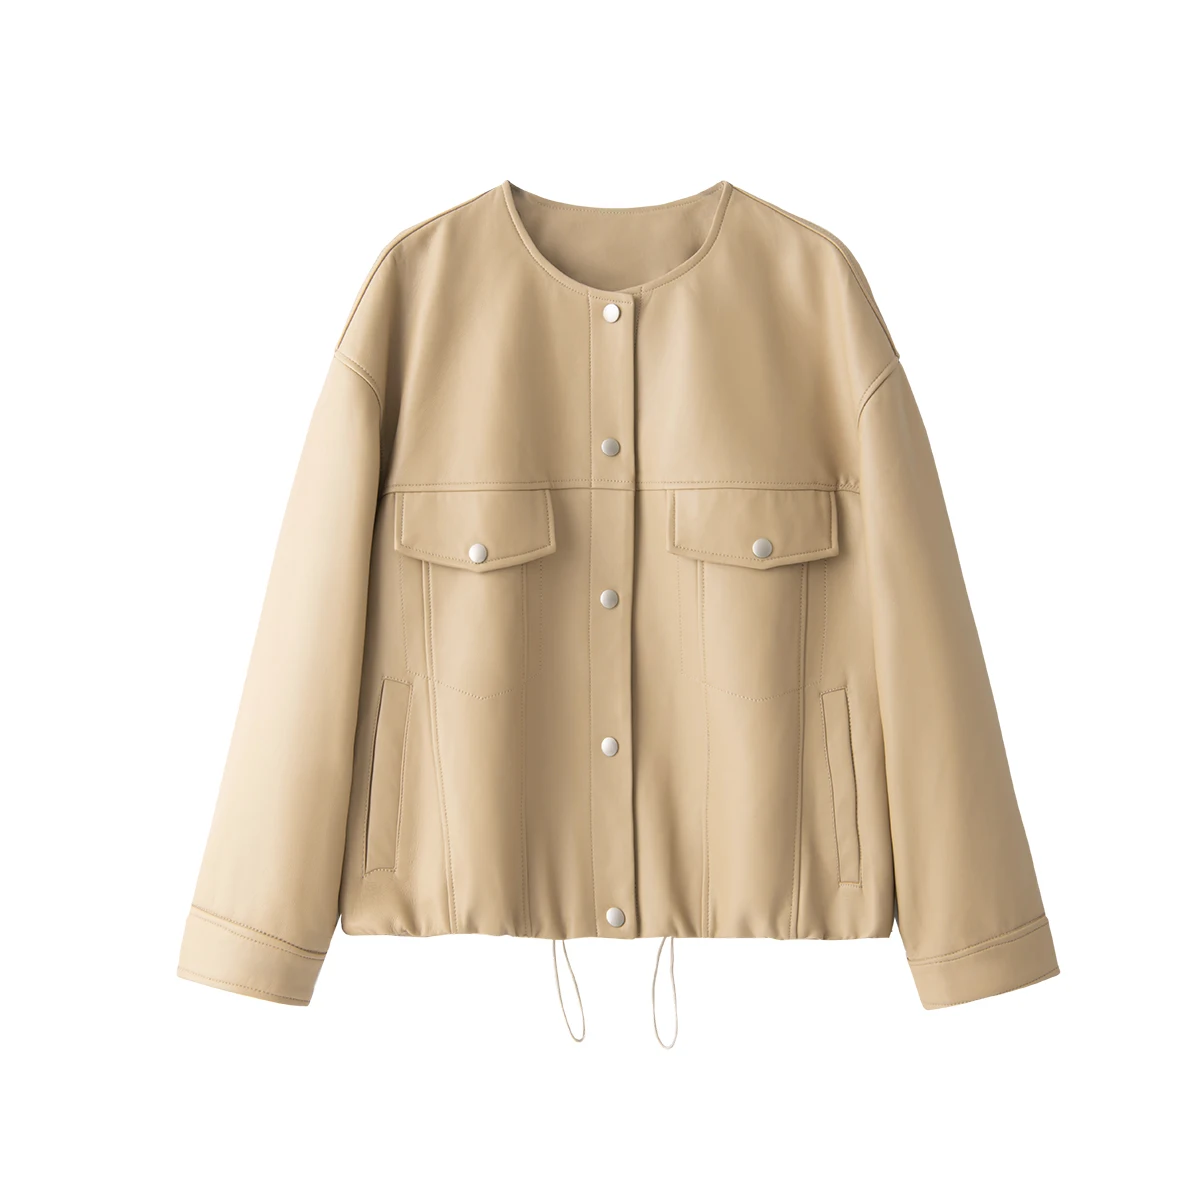 High-quality Sheepskin  Genuine Leather Jacket  Covered Button  Leather Jacket Woman  All Season O-Neck  Casaco Feminino Inverno enlarge